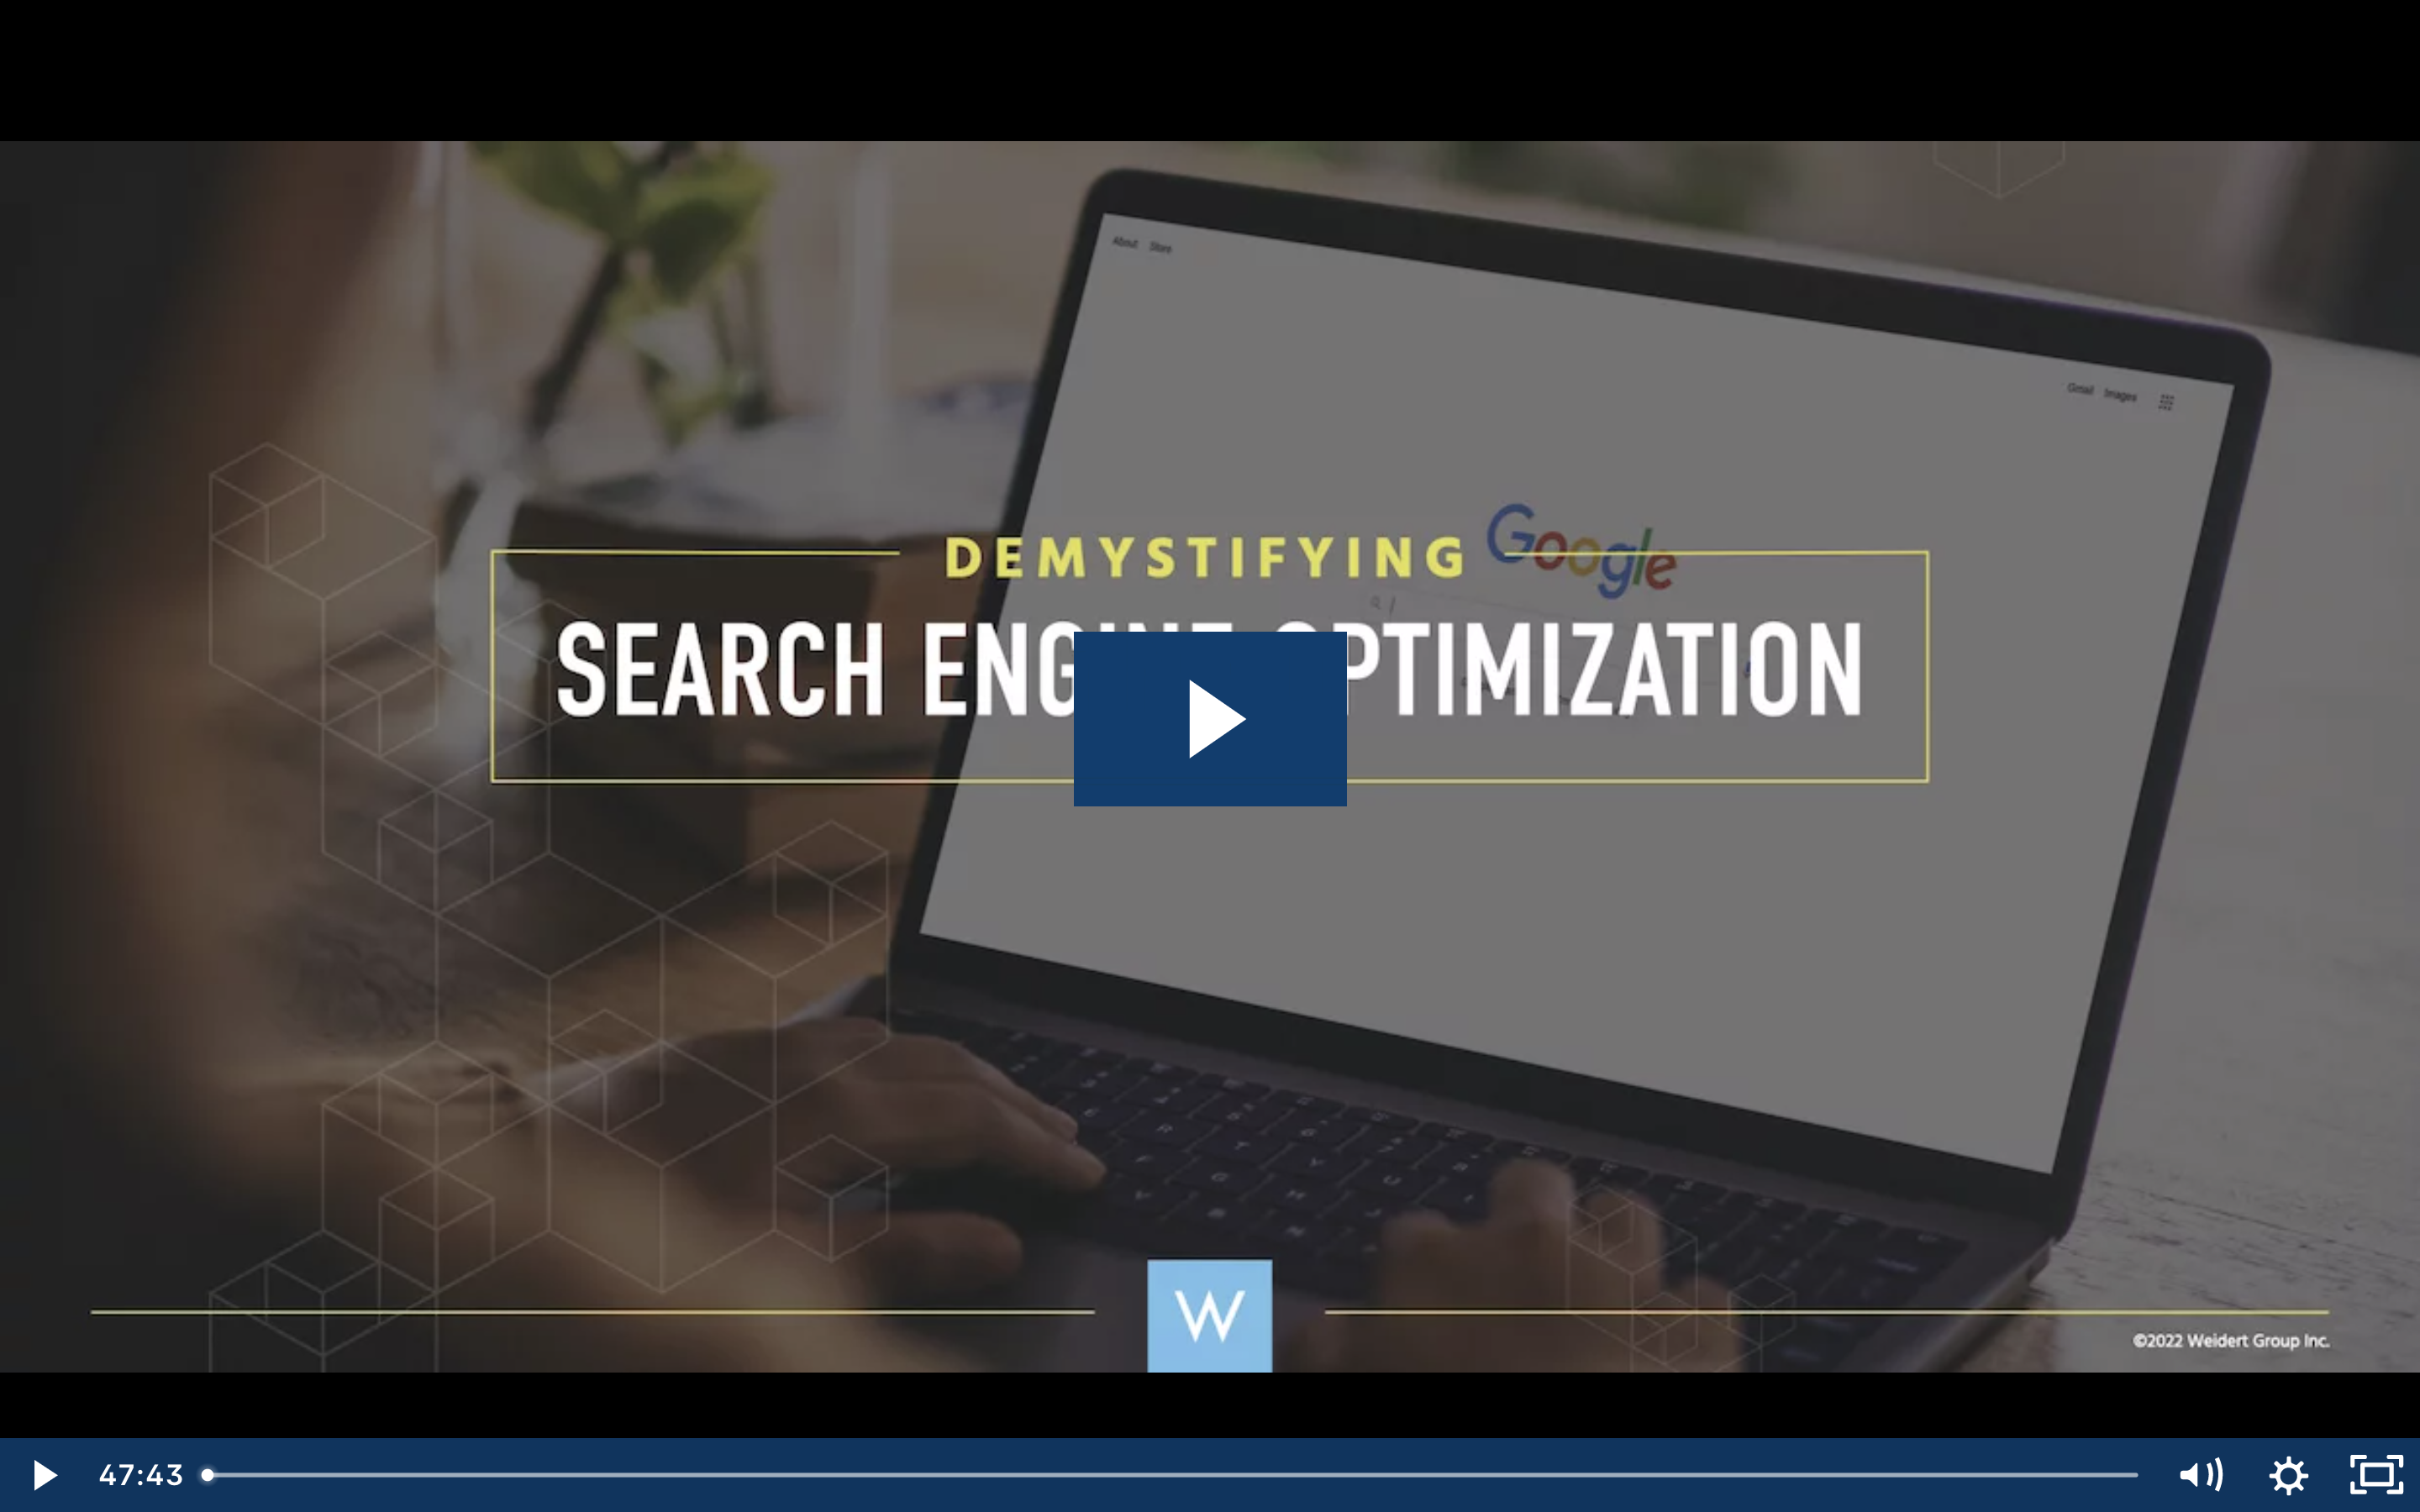 Demystifying Search Engine Optimization